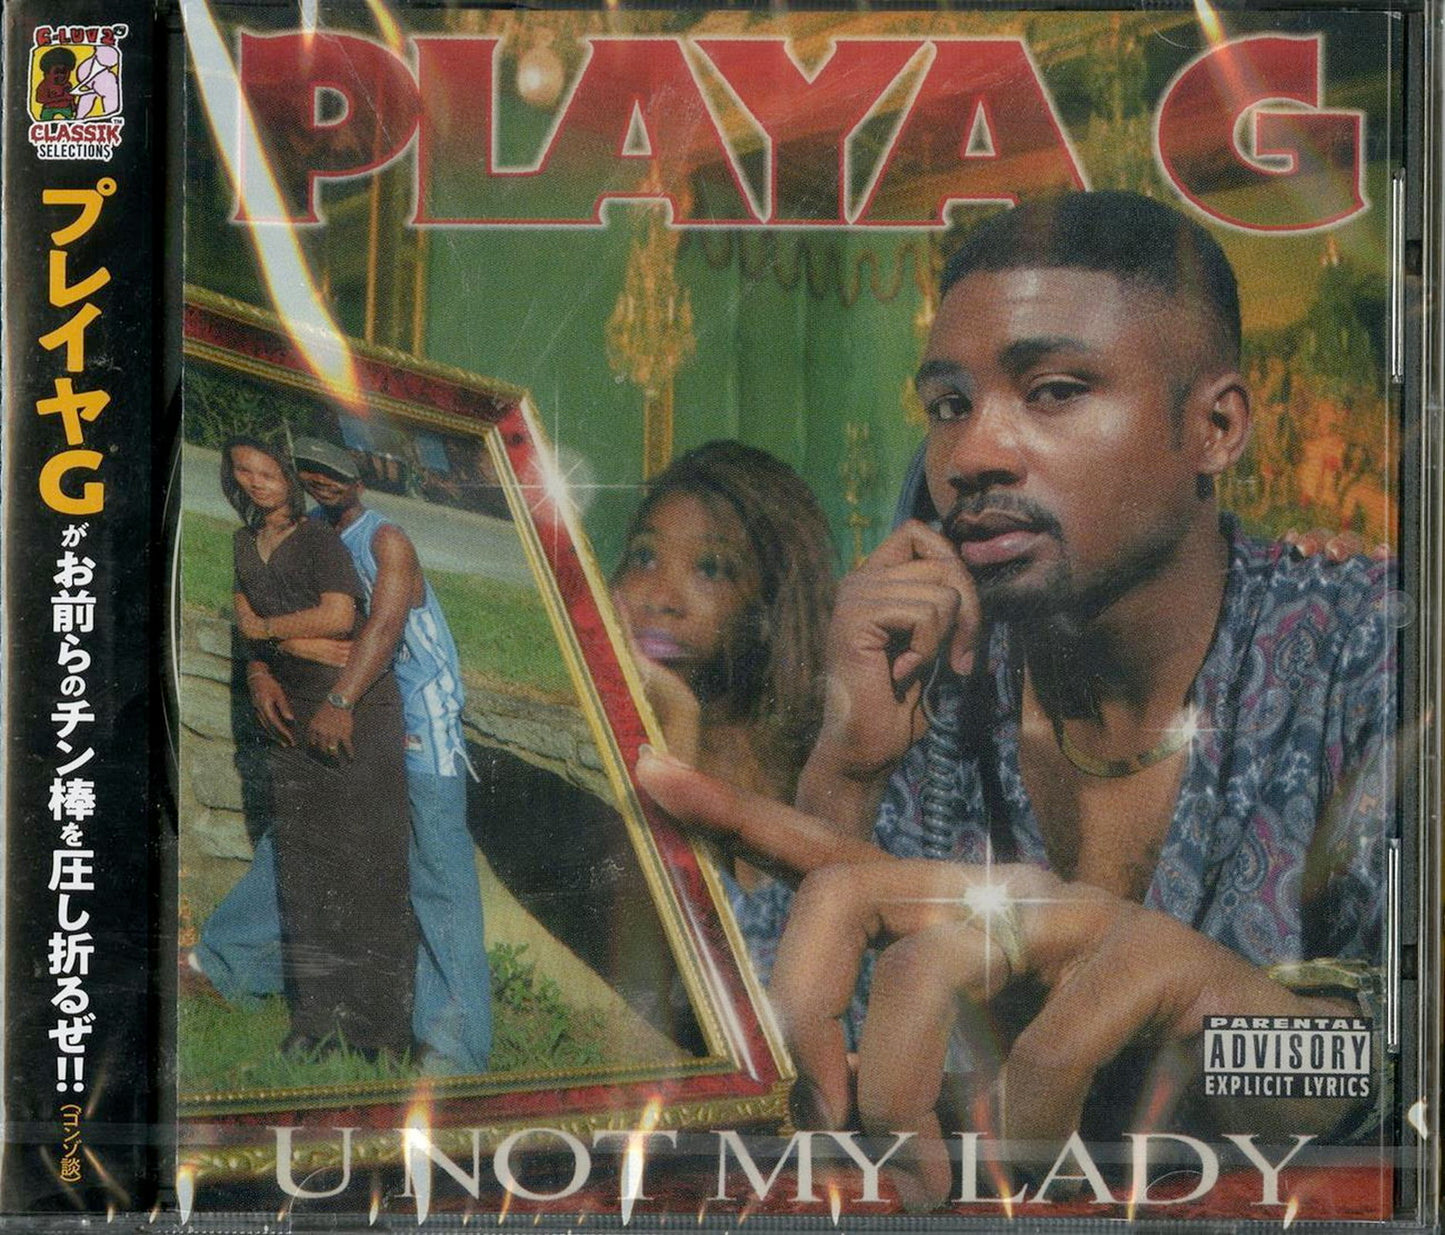 Playa G - U Not My Lady - Japan CD